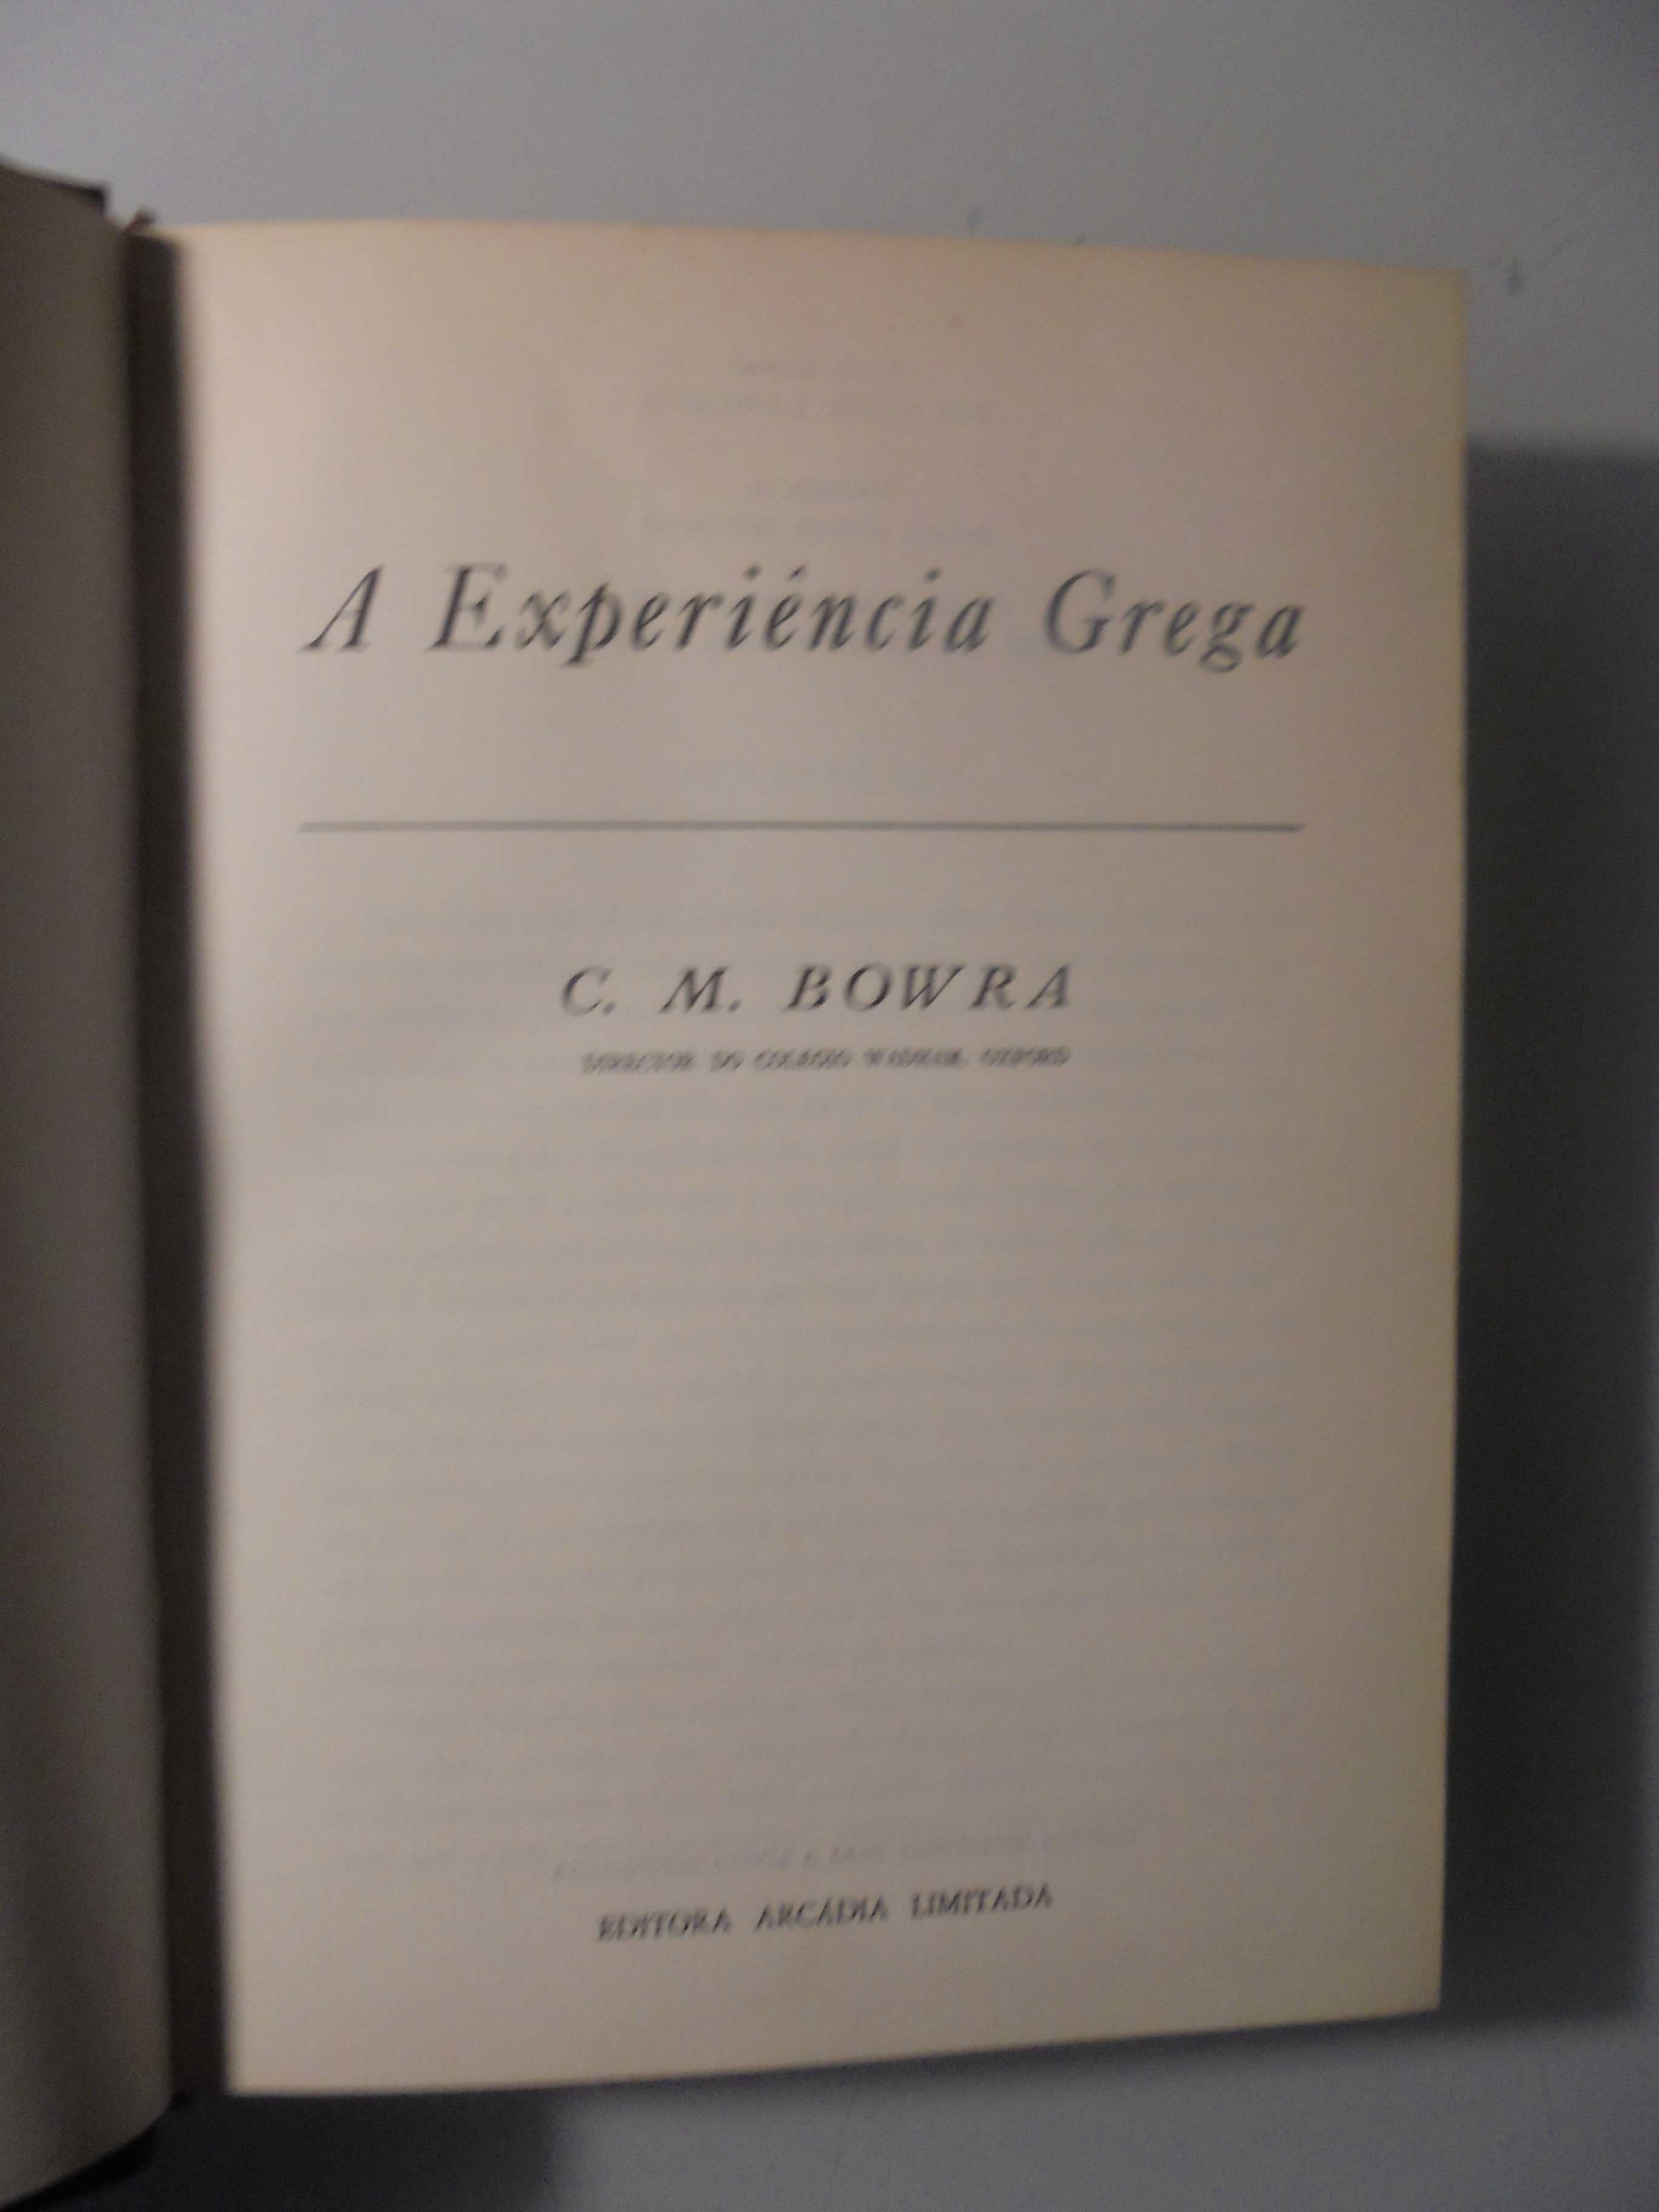 Bowra (C.M.);A Experiência Grega